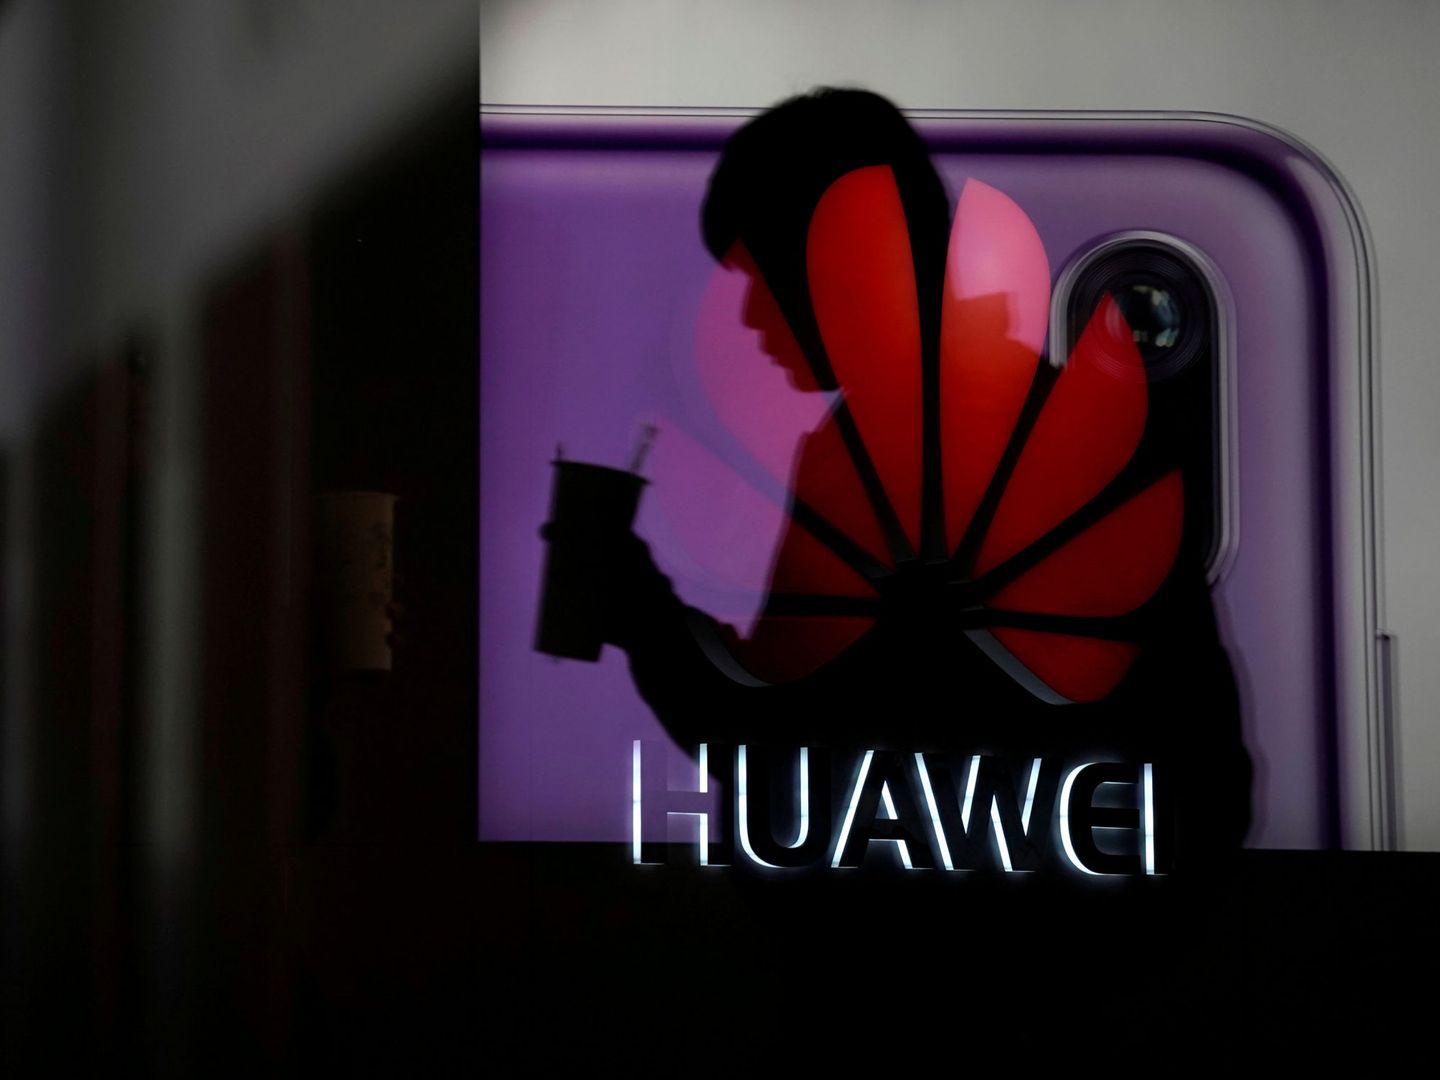 Un hombre pasa por detrás de un escaparate con un anuncio de Huawei en Shanghai, en diciembre de 2018. (Reuters)